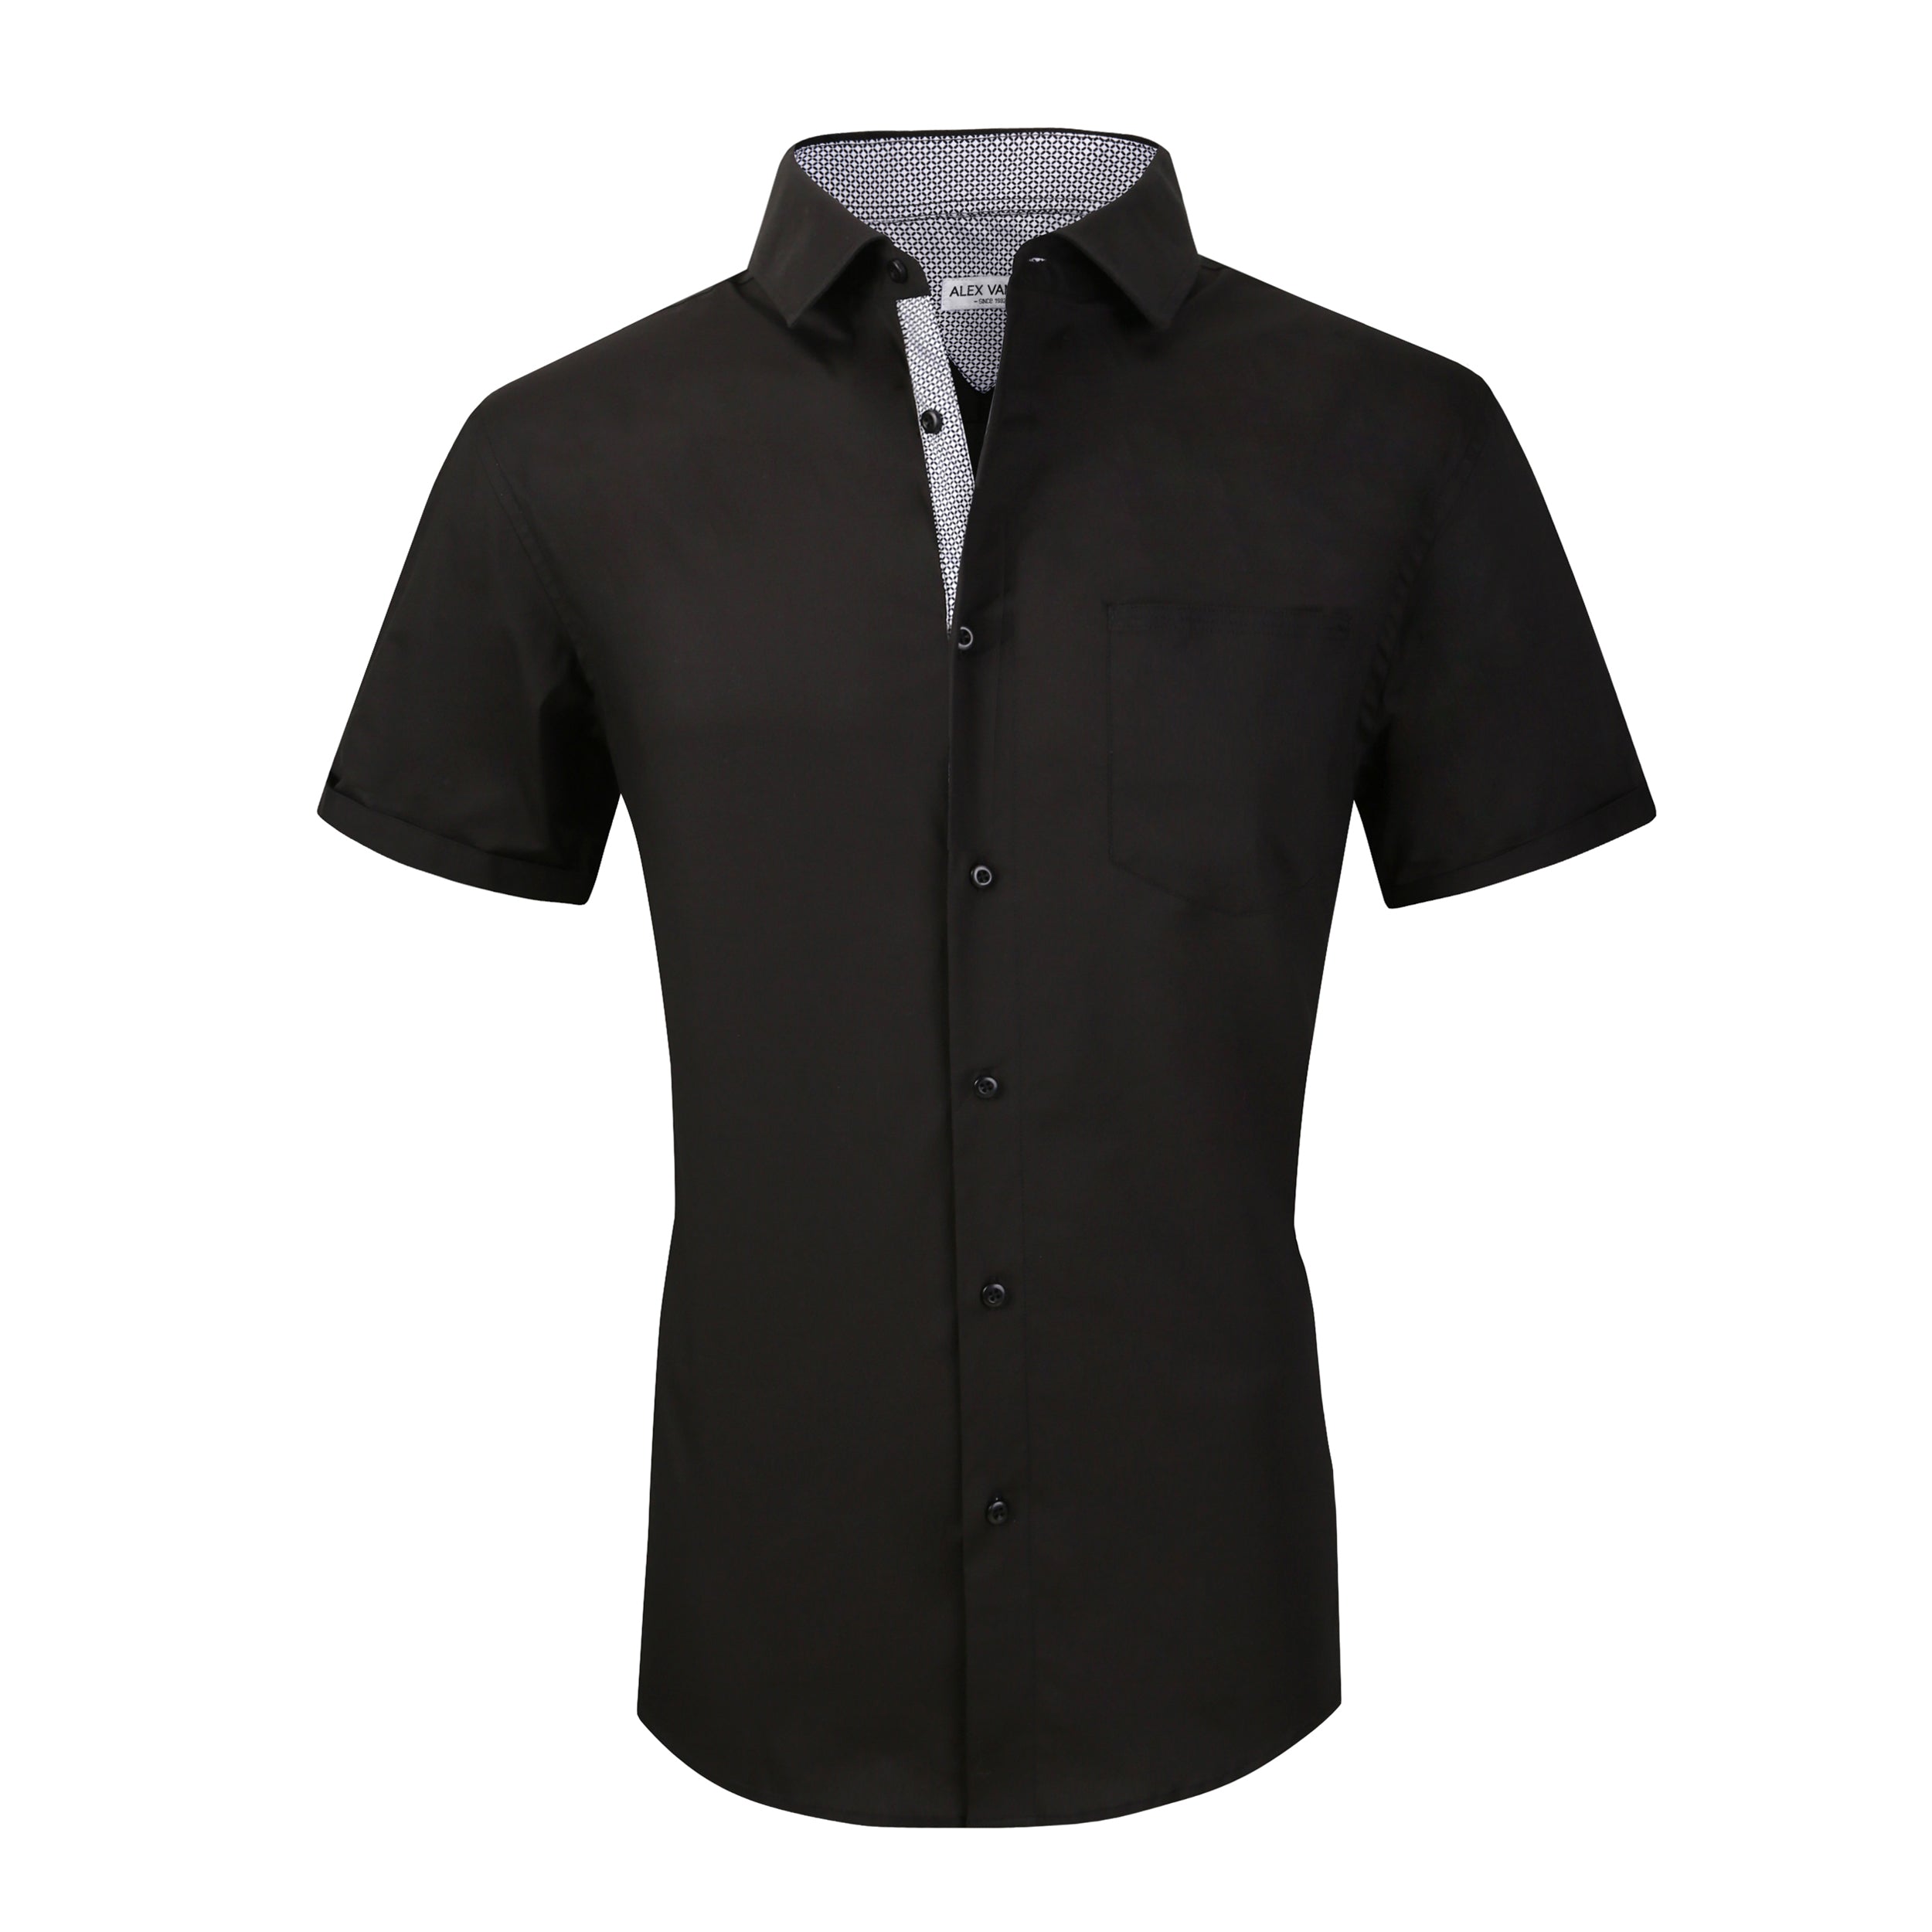 Batch Shirts Men's Short Sleeve Casual Button Down Shirt in Jet Black Stretch Cotton Medium - Tall